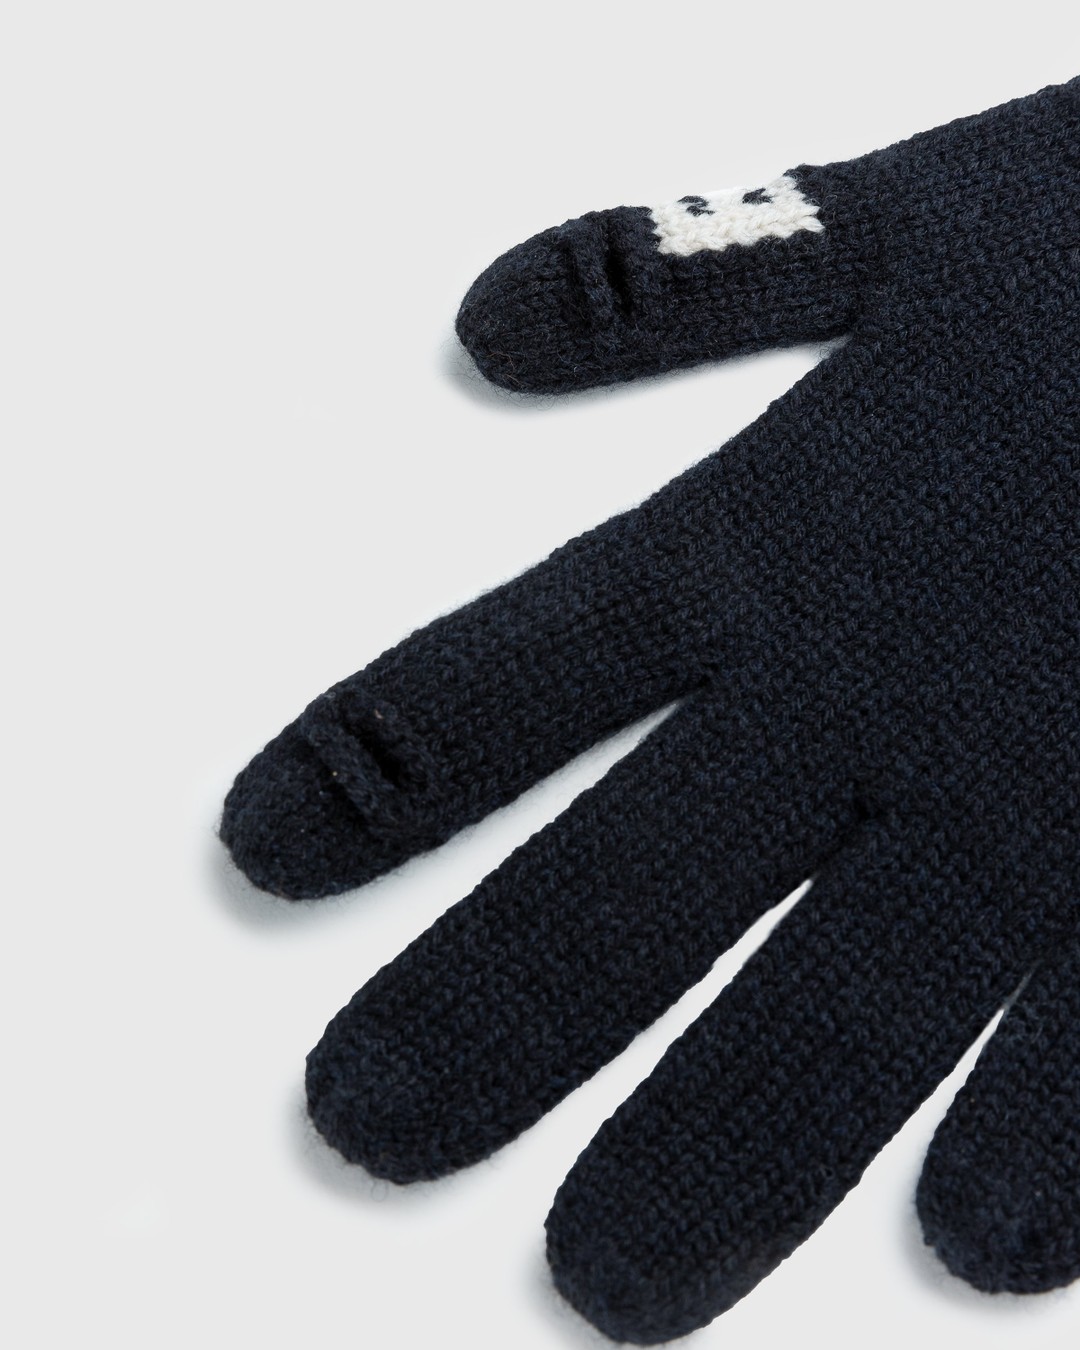 Acne Studios – Knit Gloves Black/Oatmeal Melange - 5-Finger - Black - Image 3